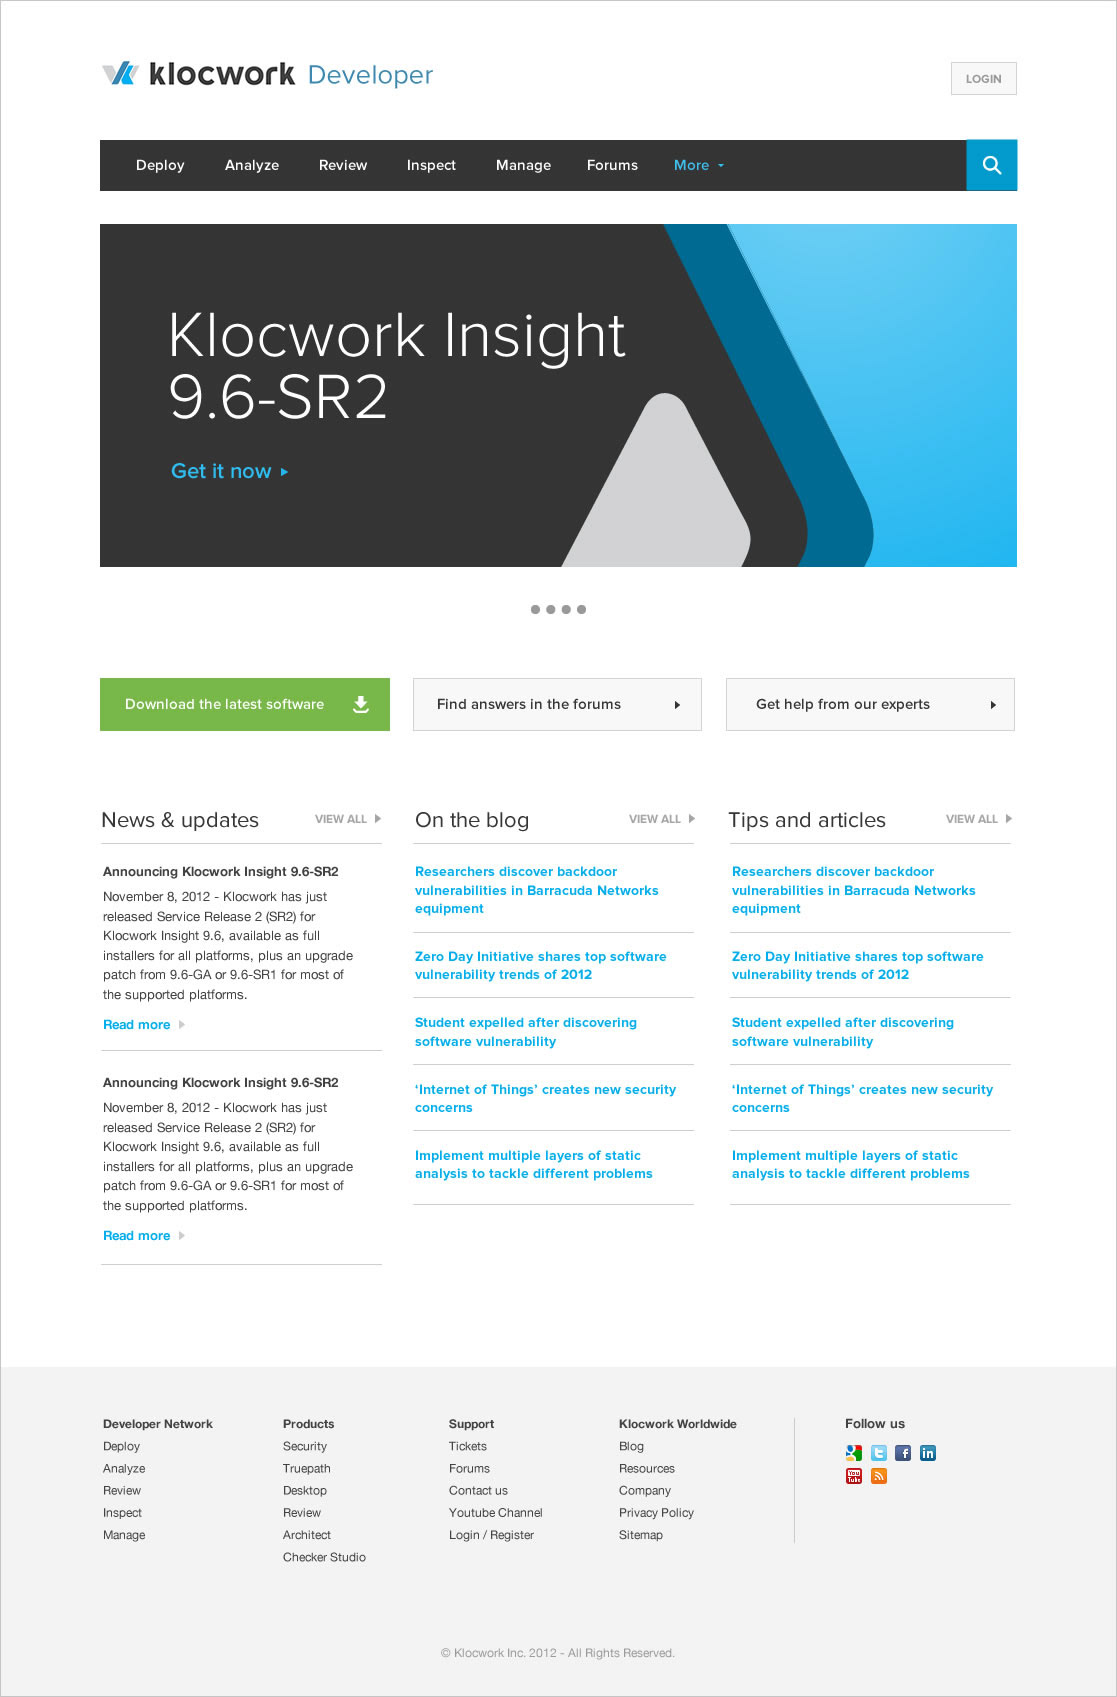 Klocwork network developer clean grid White